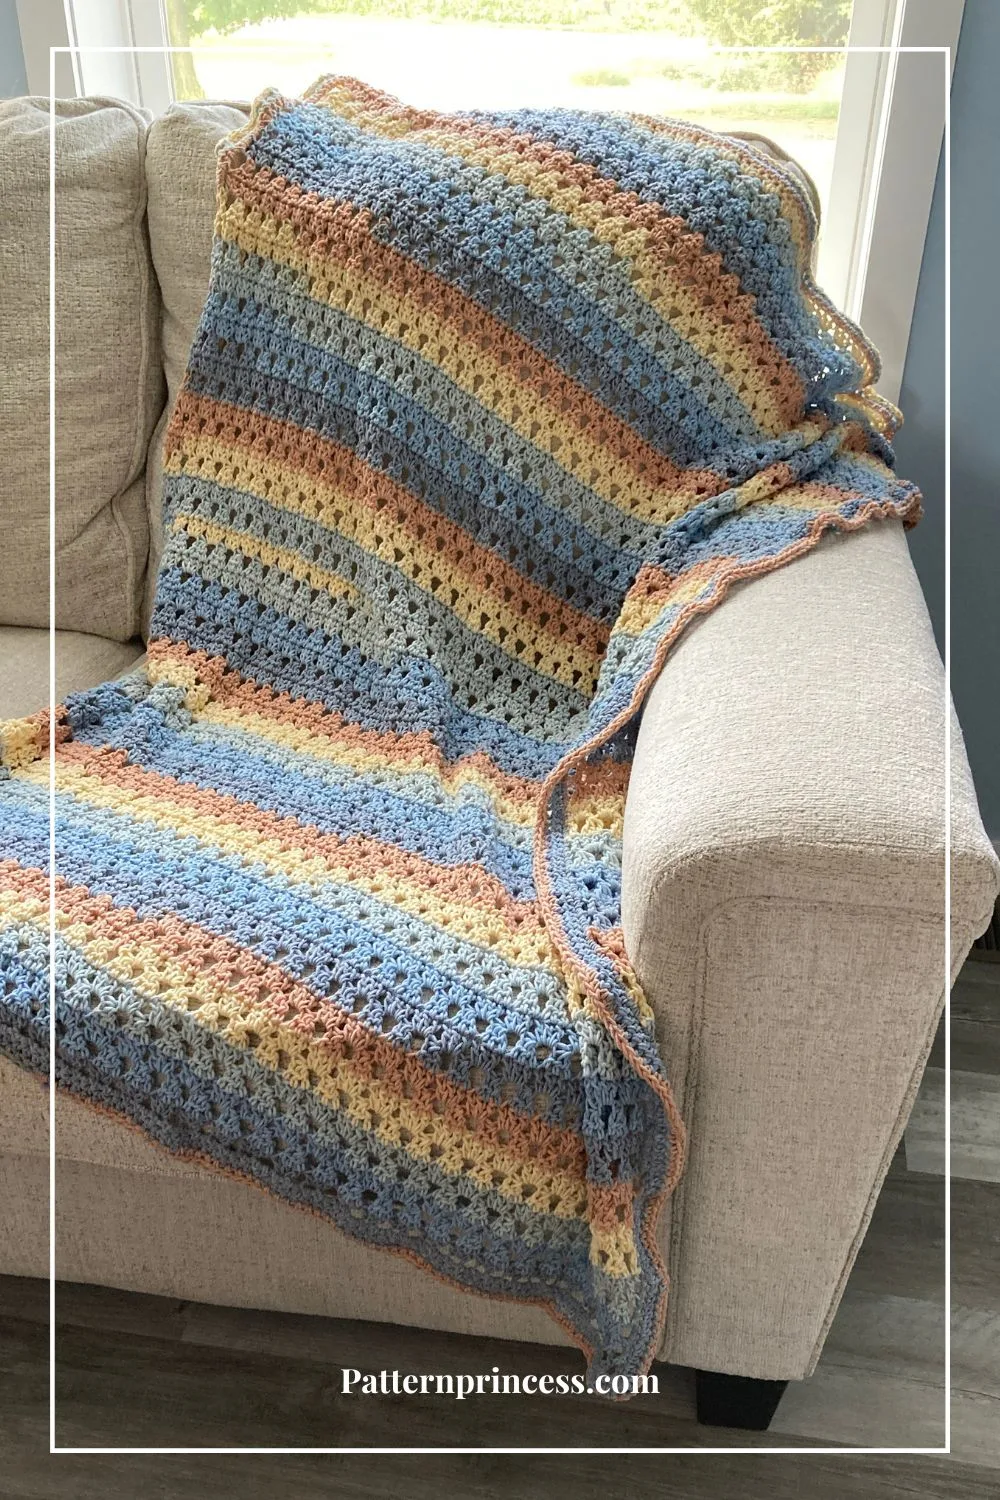 Crochet Blanket in Beach Colors